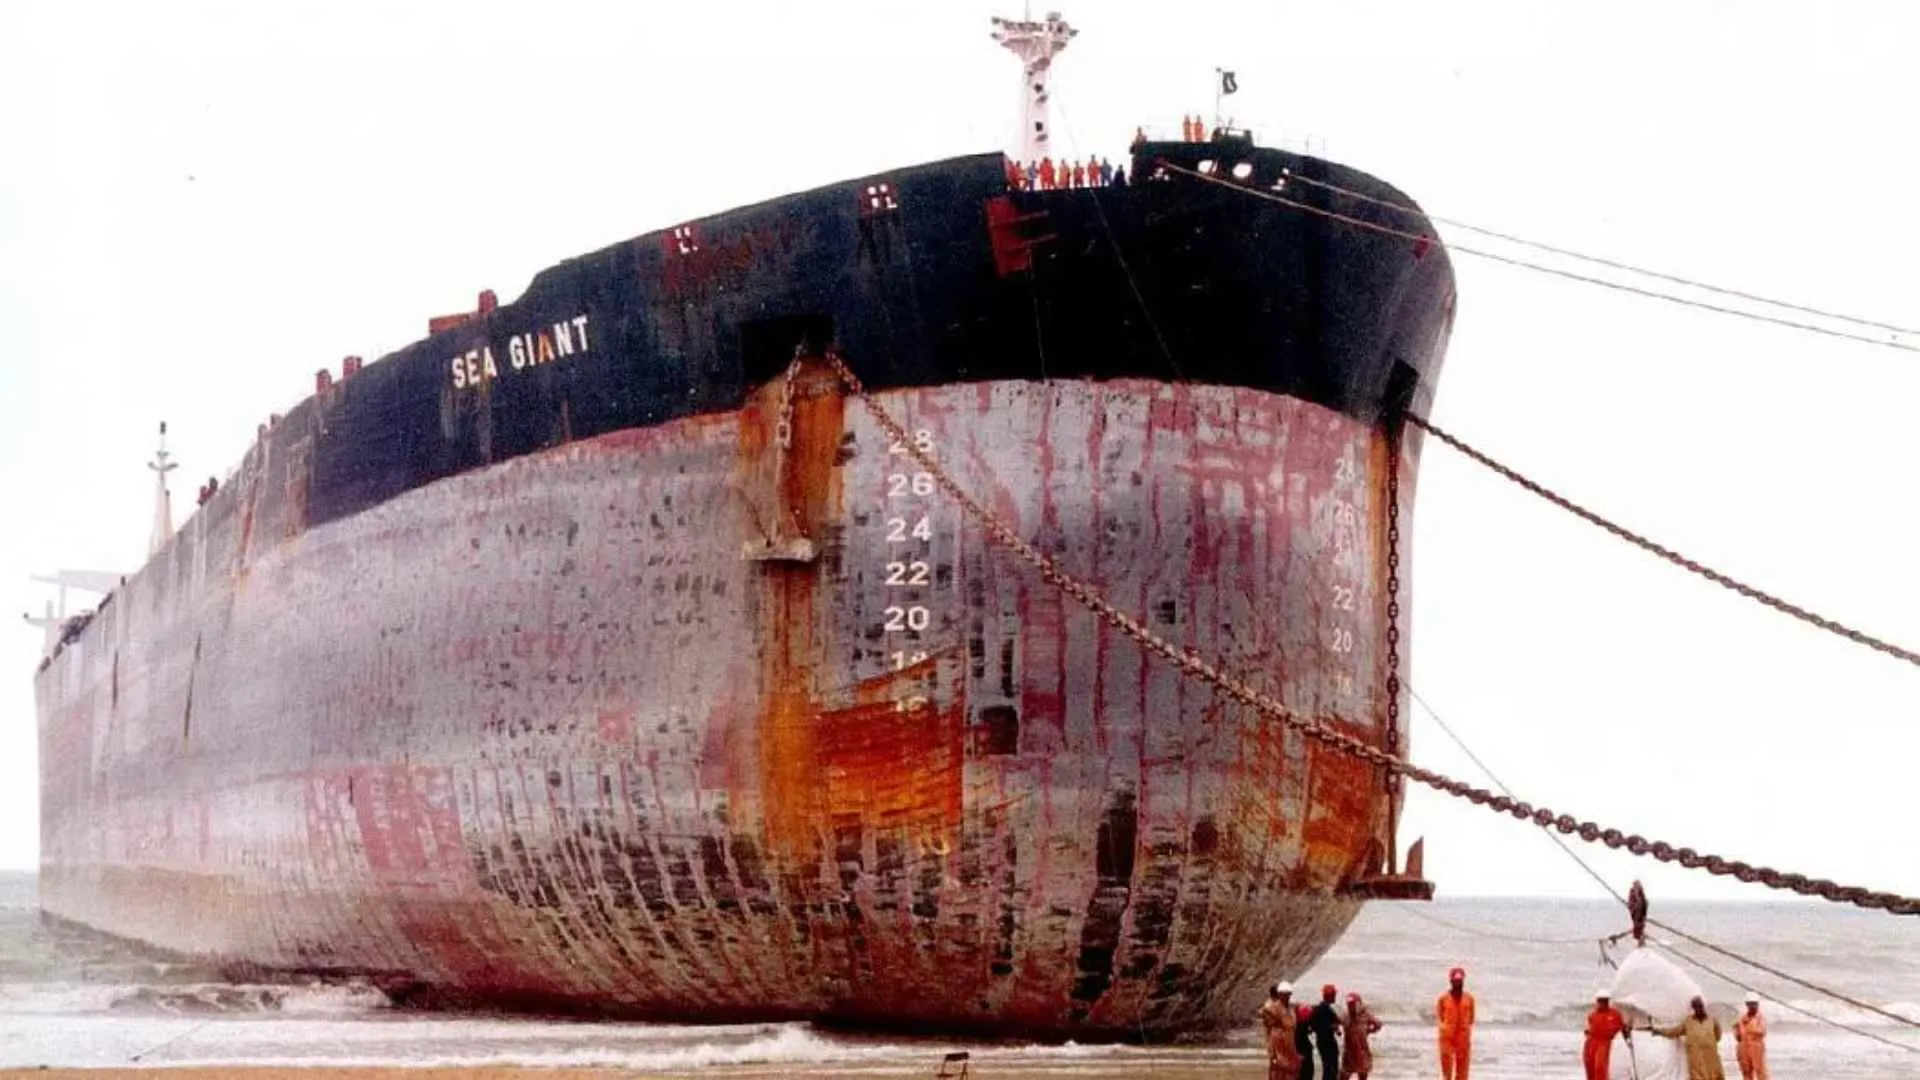 Seawise Giant ship